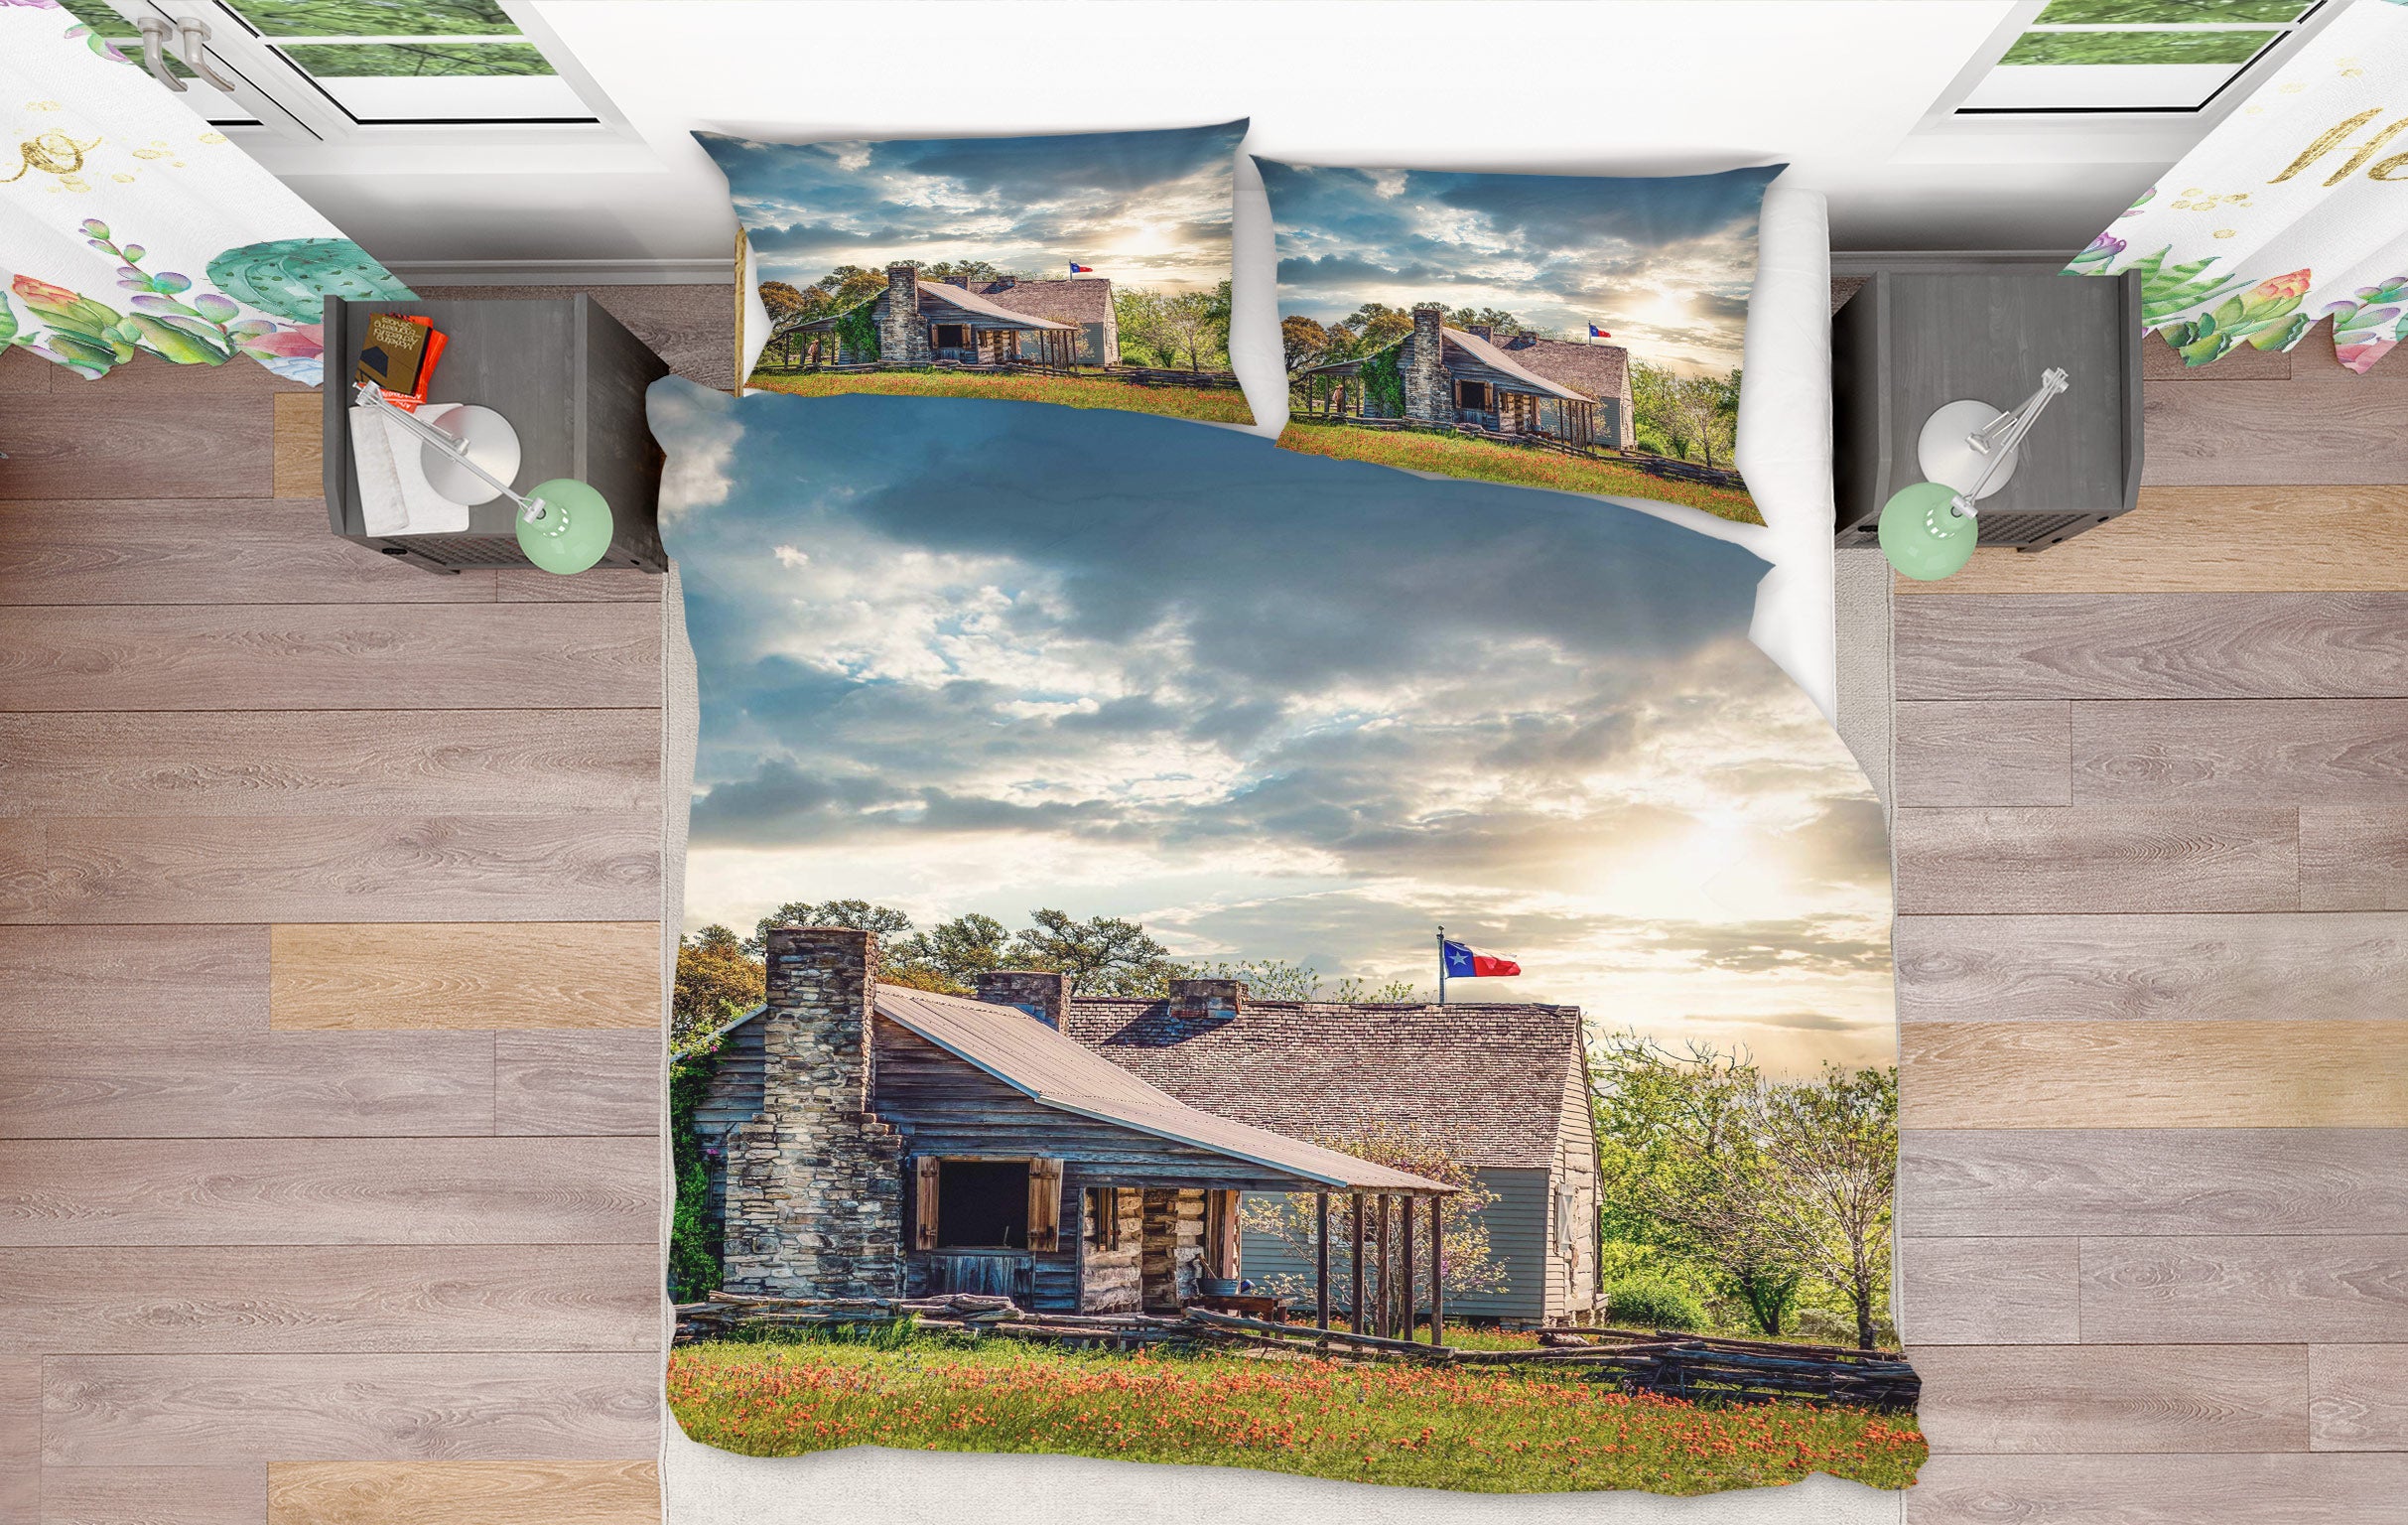 3D Grass House 8573 Beth Sheridan Bedding Bed Pillowcases Quilt